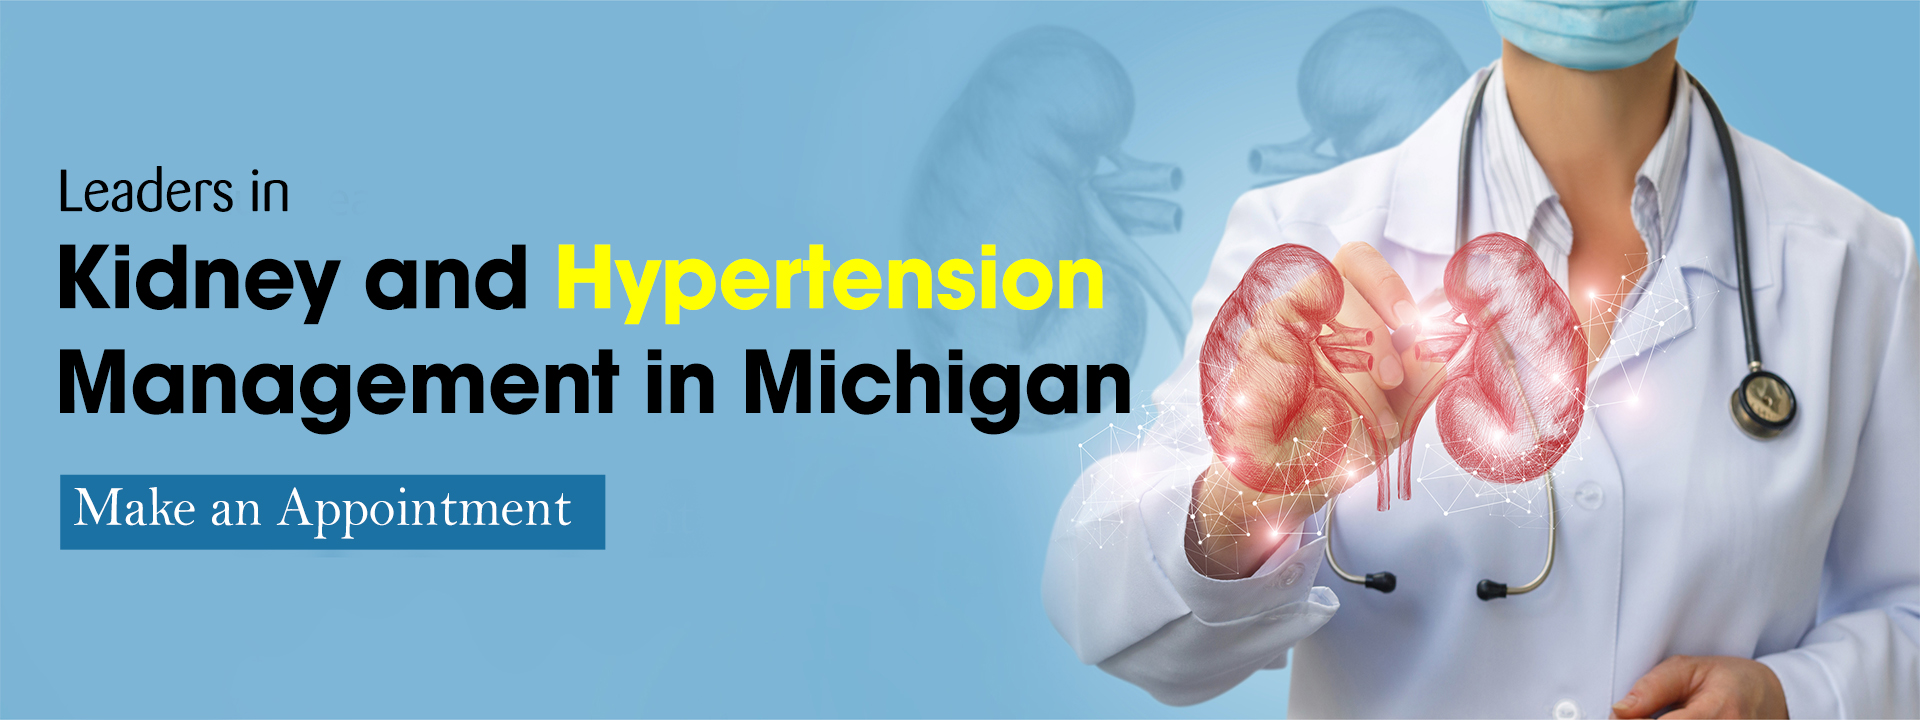 kidney hypertension managment in michigan